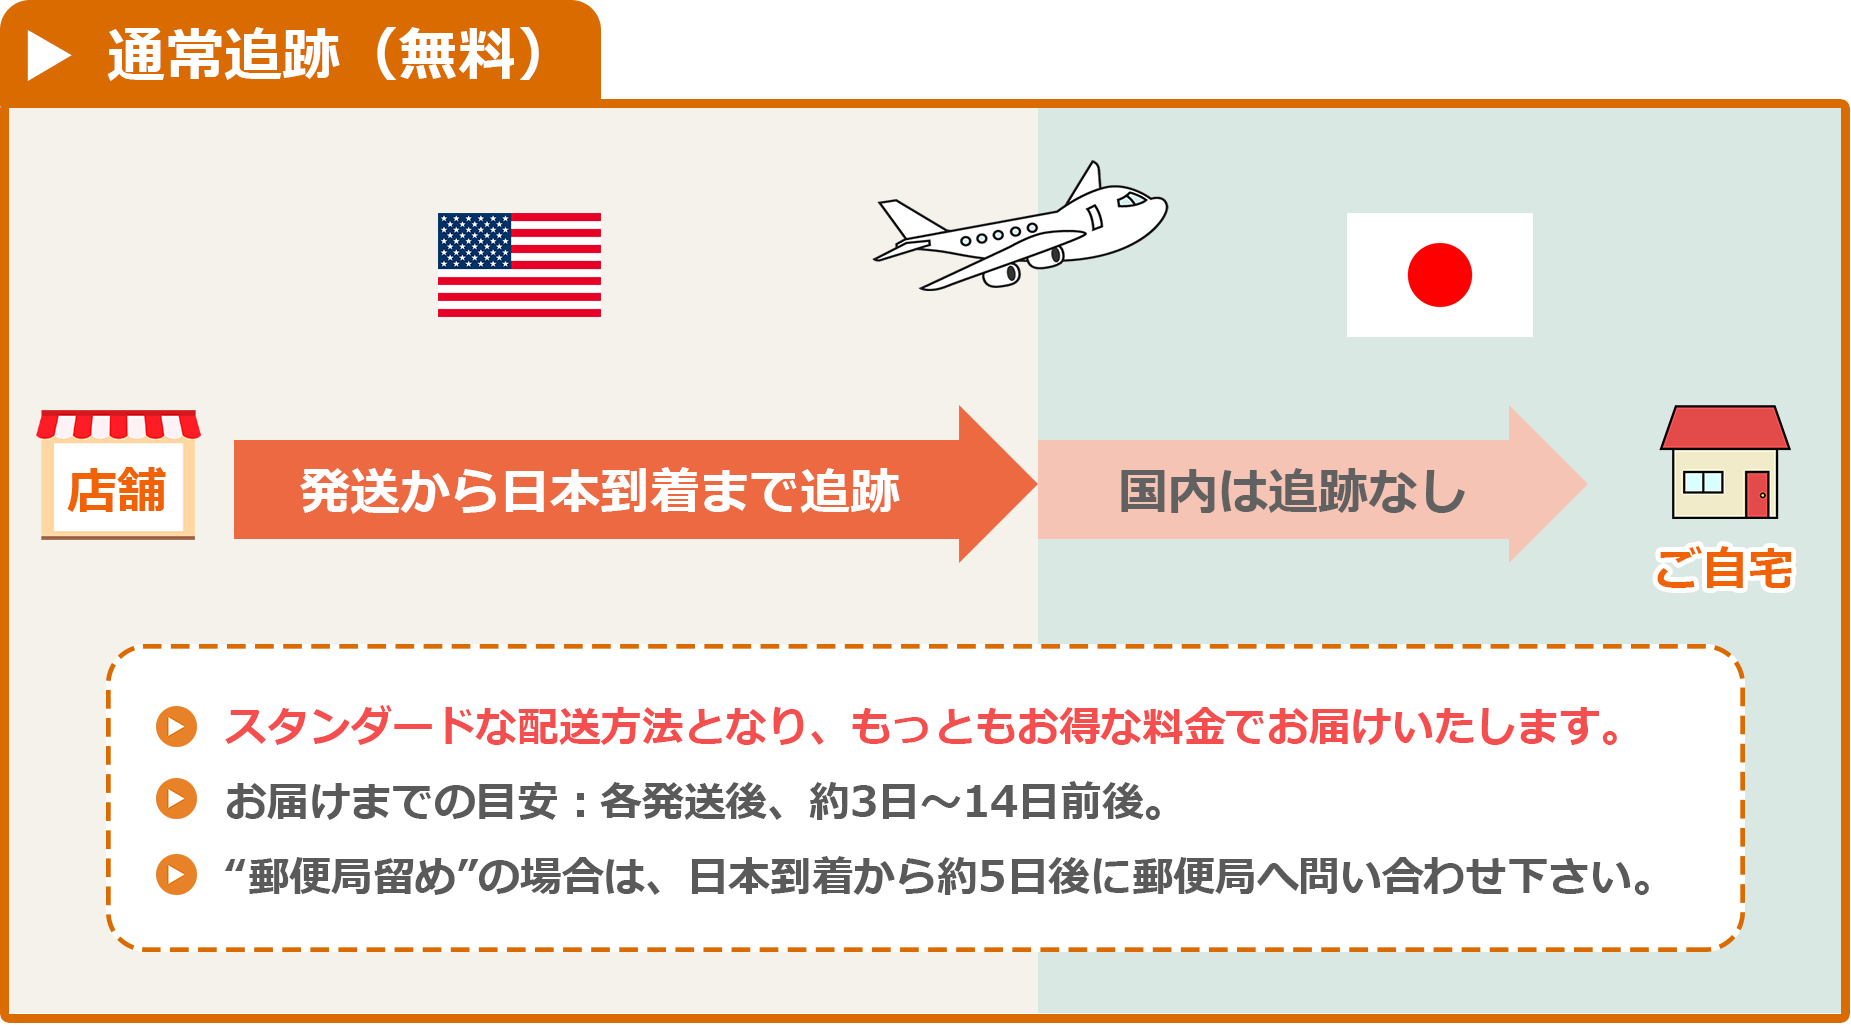 Benicia Street カークランド製 ロゲイン ミノキシジル ５ ２個セット ２ヶ月分 専用スポイト 日本語説明書付 追跡付き 送料無料